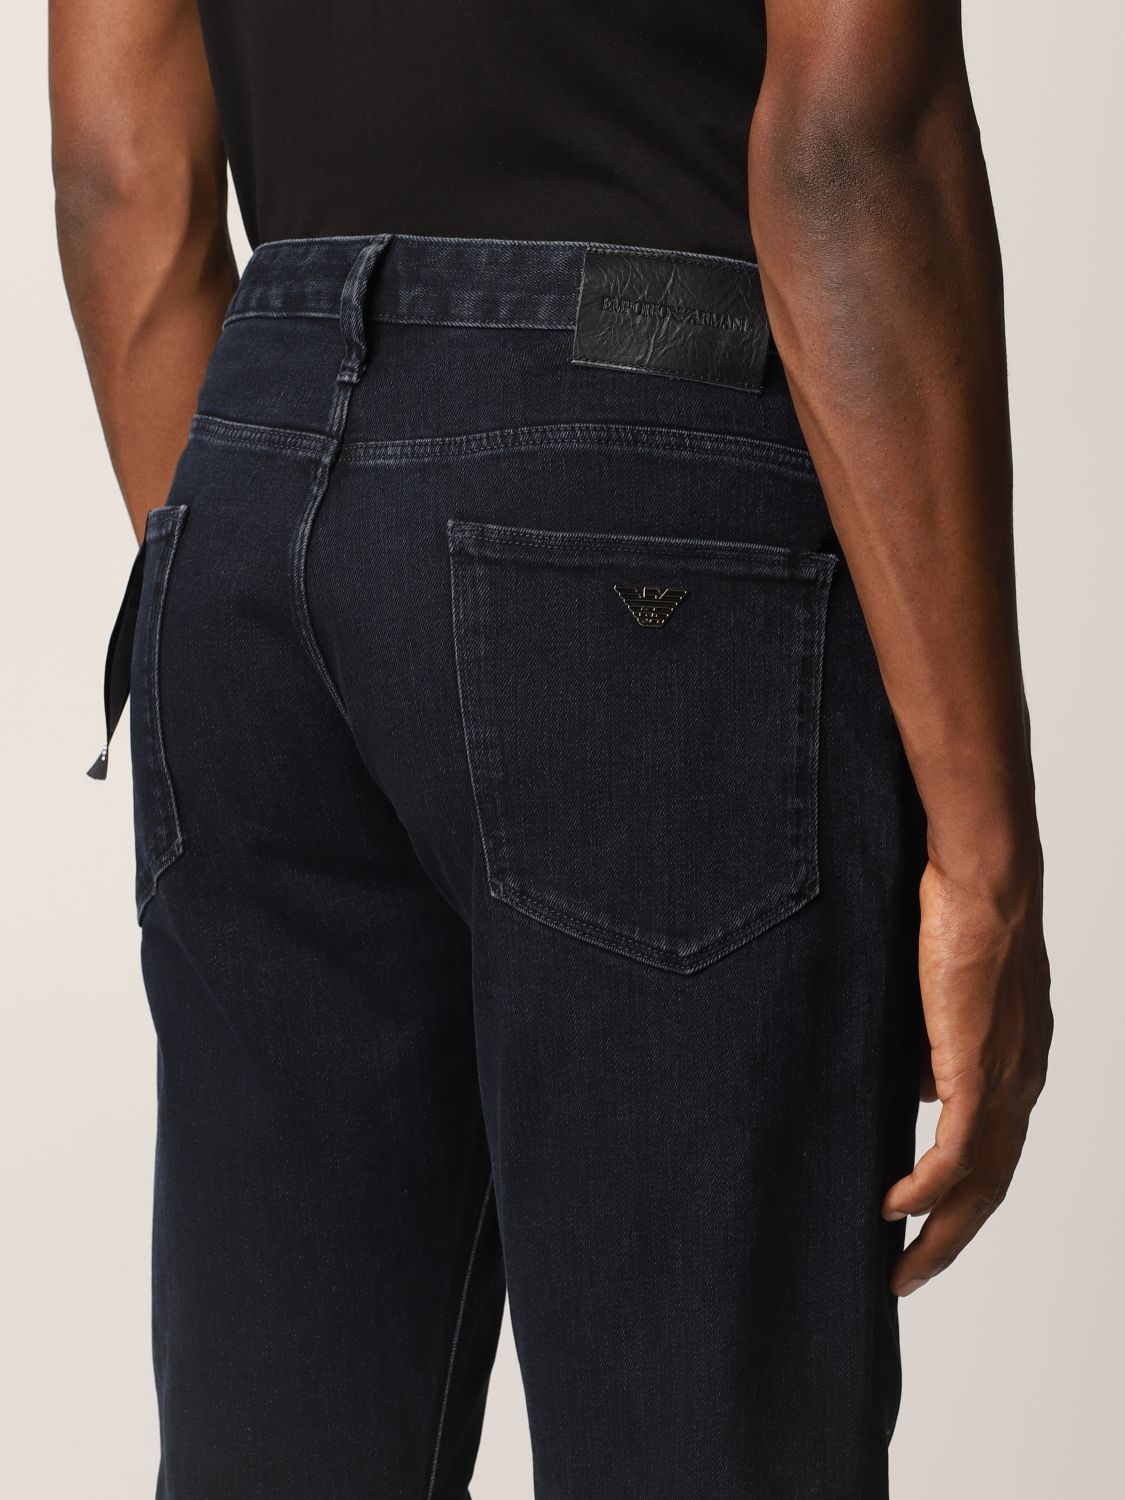 EMPORIO ARMANI: 5-pocket jeans - Blue | Emporio Armani jeans 8N1J06 ...